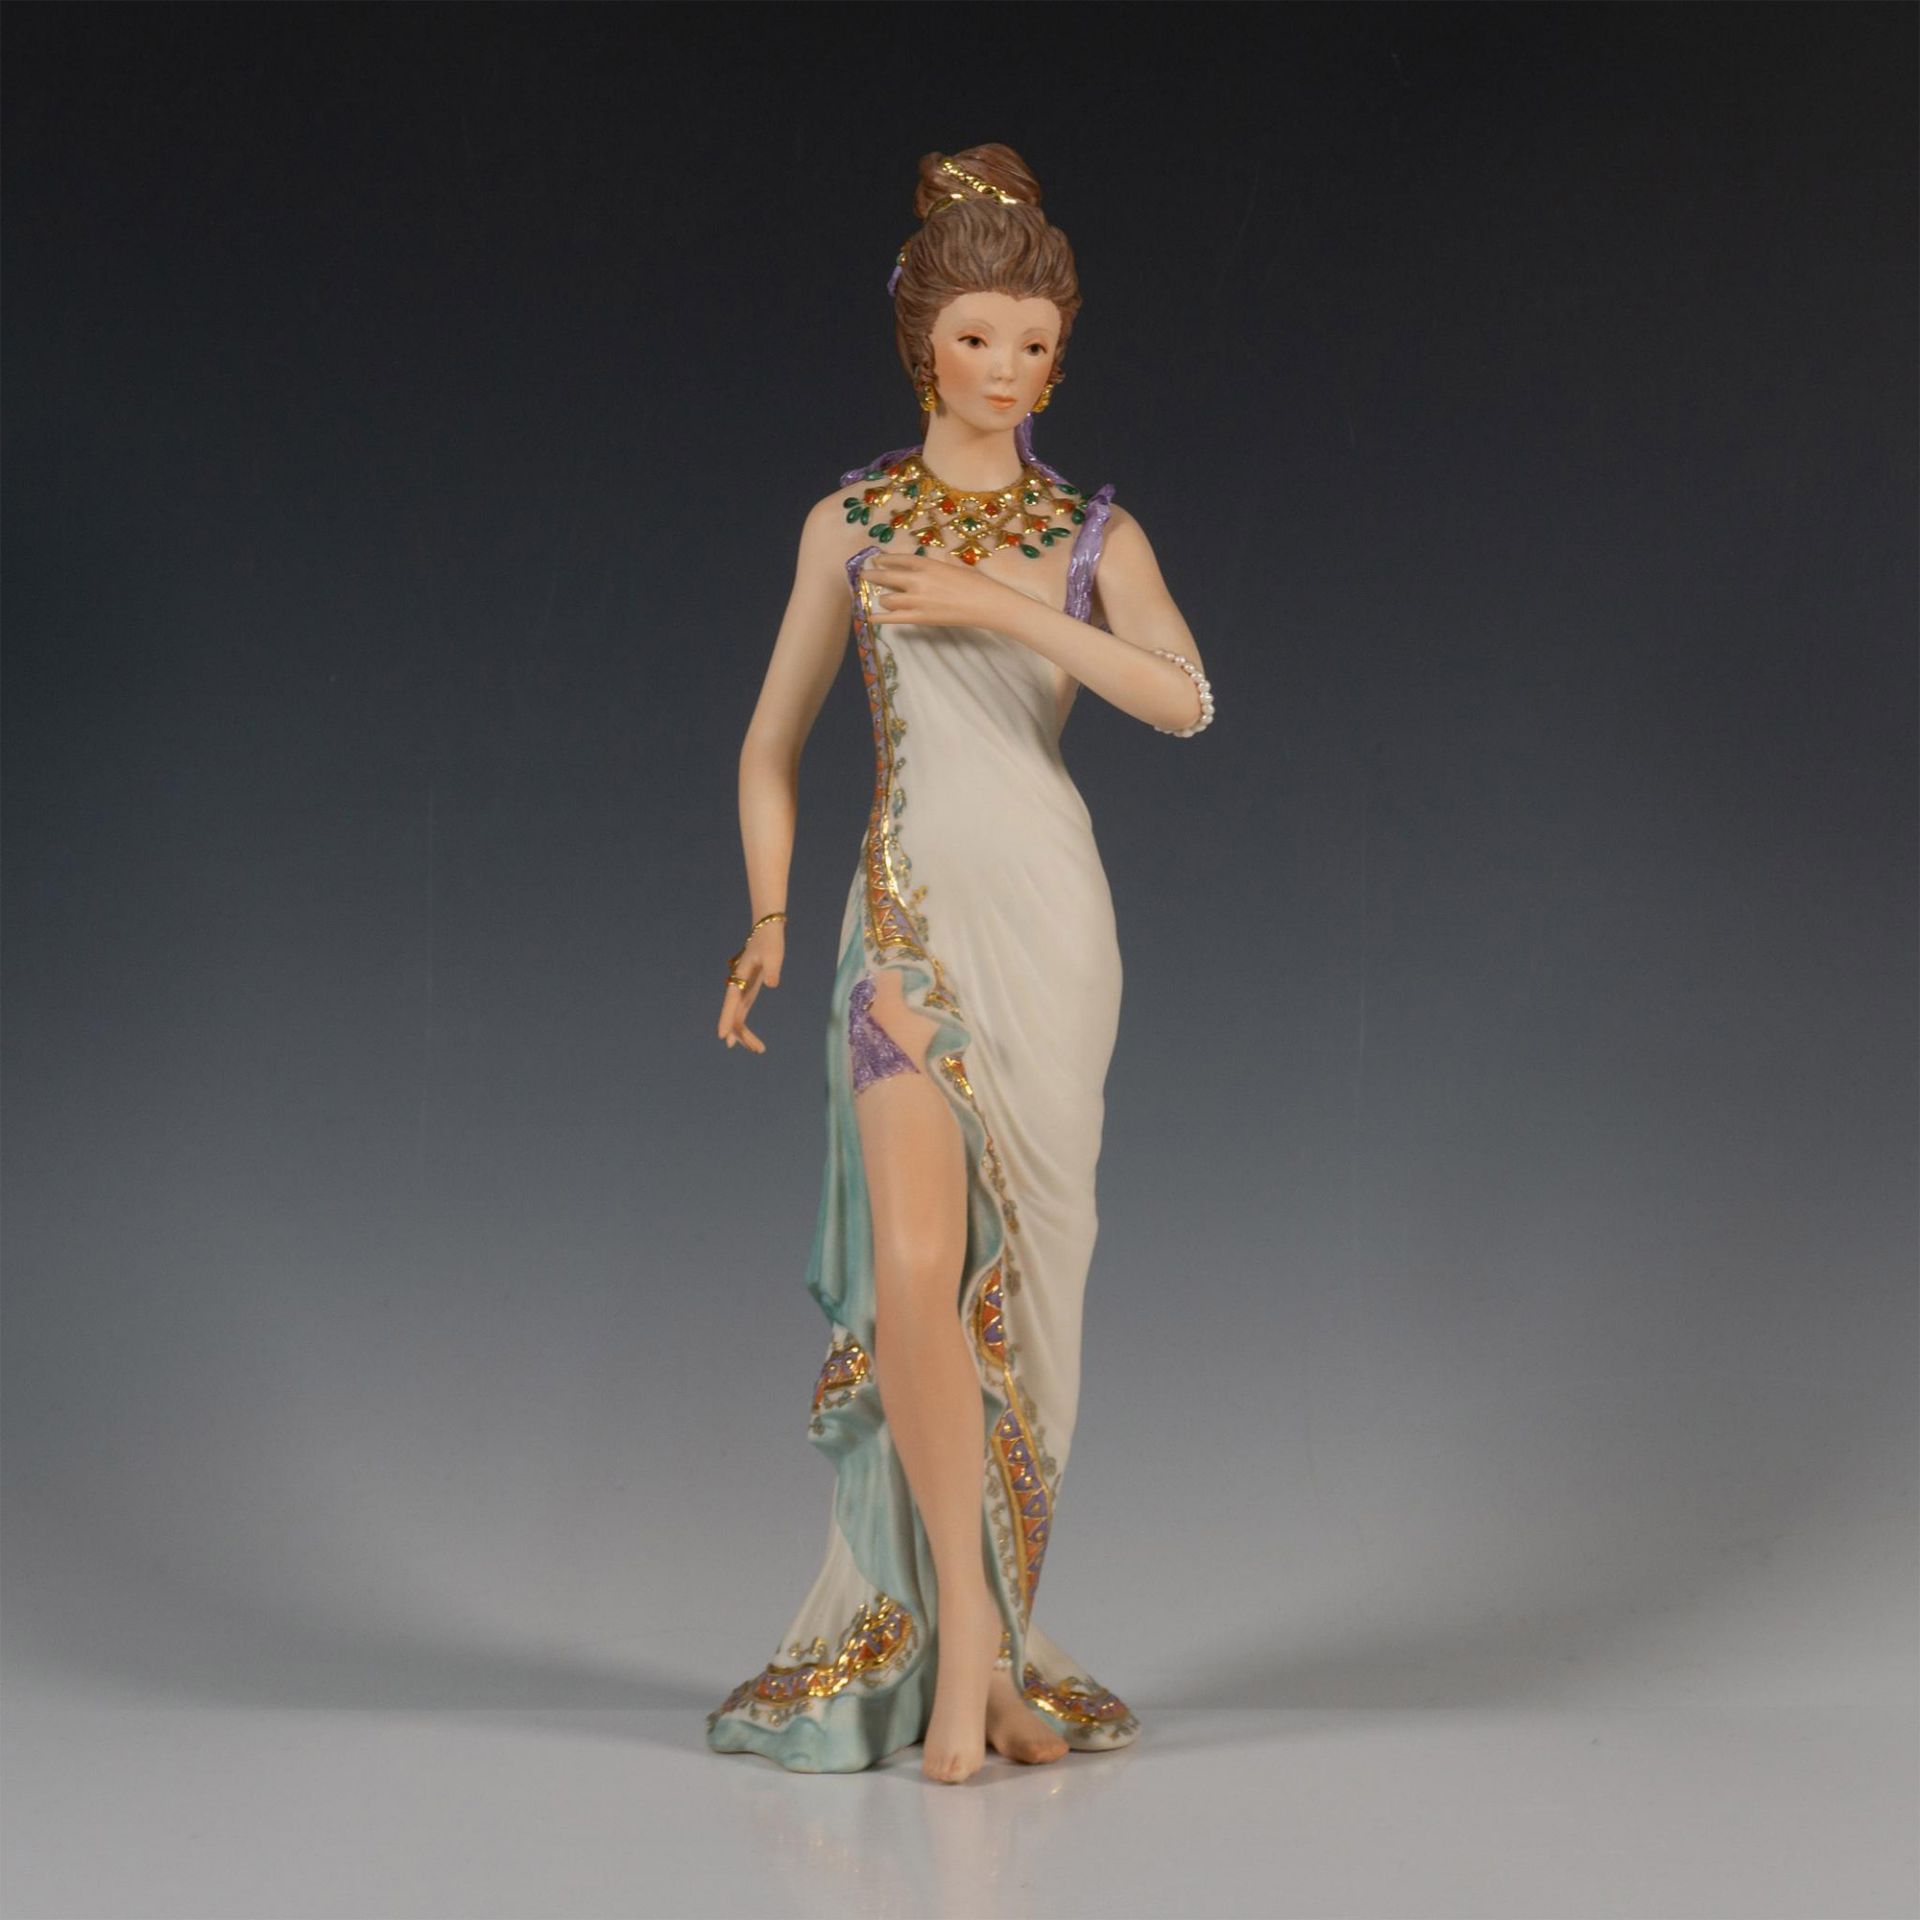 Cybis Limited Edition Figurine, Bathsheba - Image 2 of 5